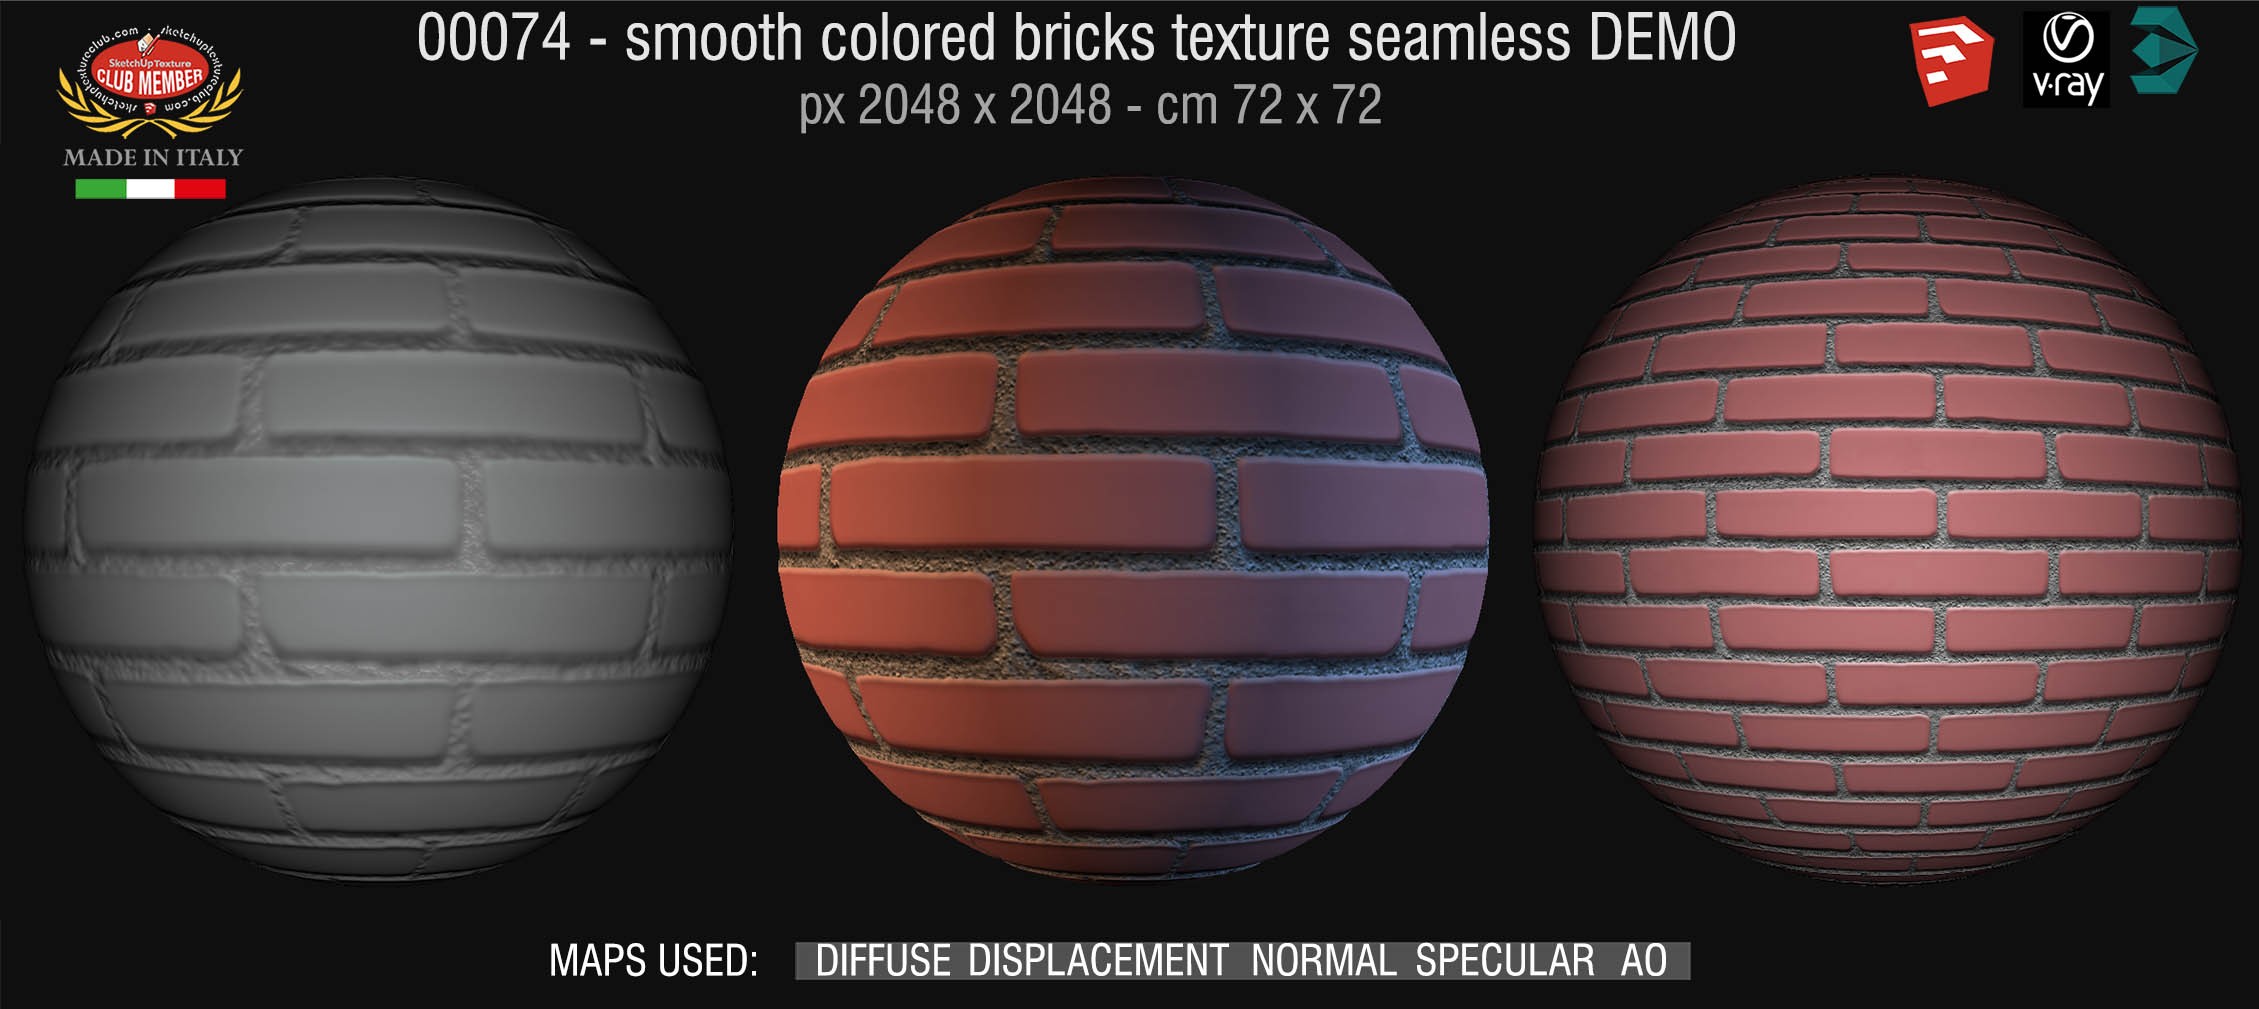 000754 smooth colored bricks texture seamless + maps DEMO